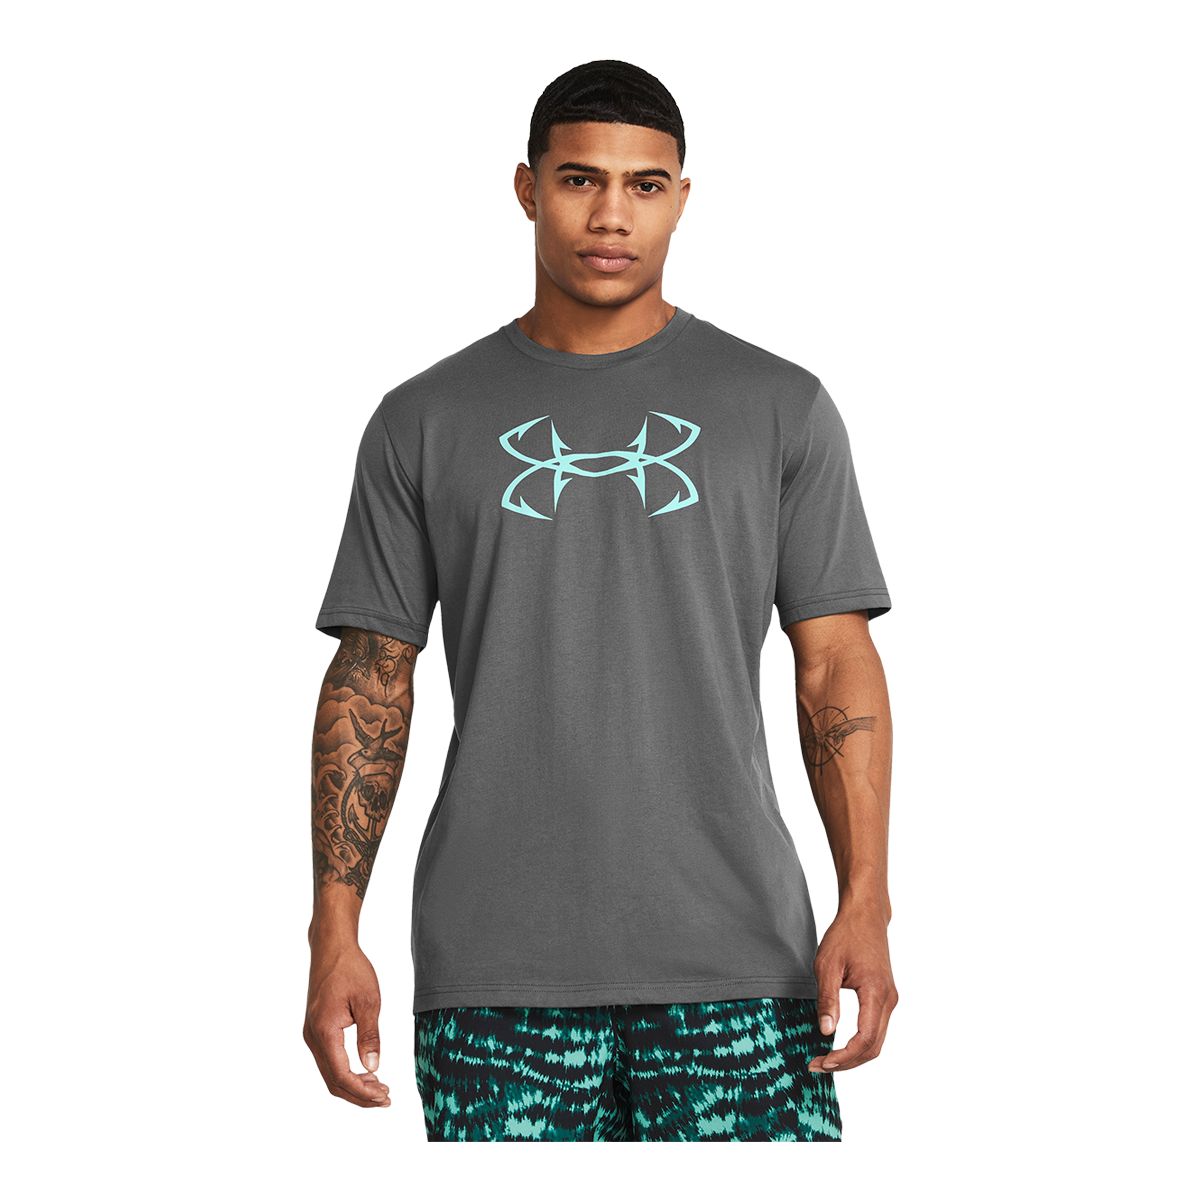 Under Armour Men's Fish Hook Logo T-Shirt - Gray, Sm